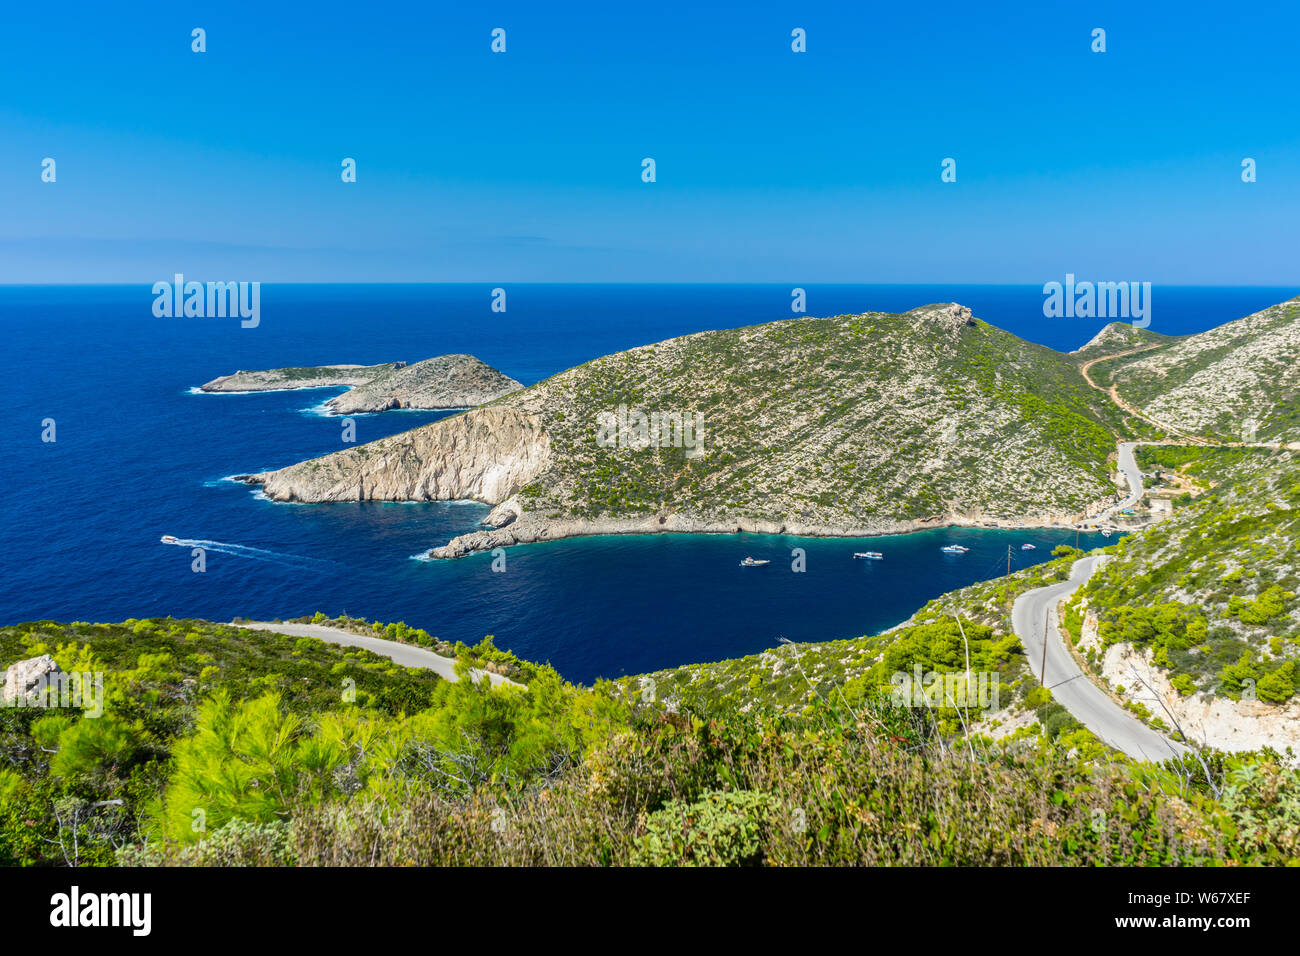 Greece, Zakynthos, Cliffy nature landscape at porto vromi harbor Stock Photo